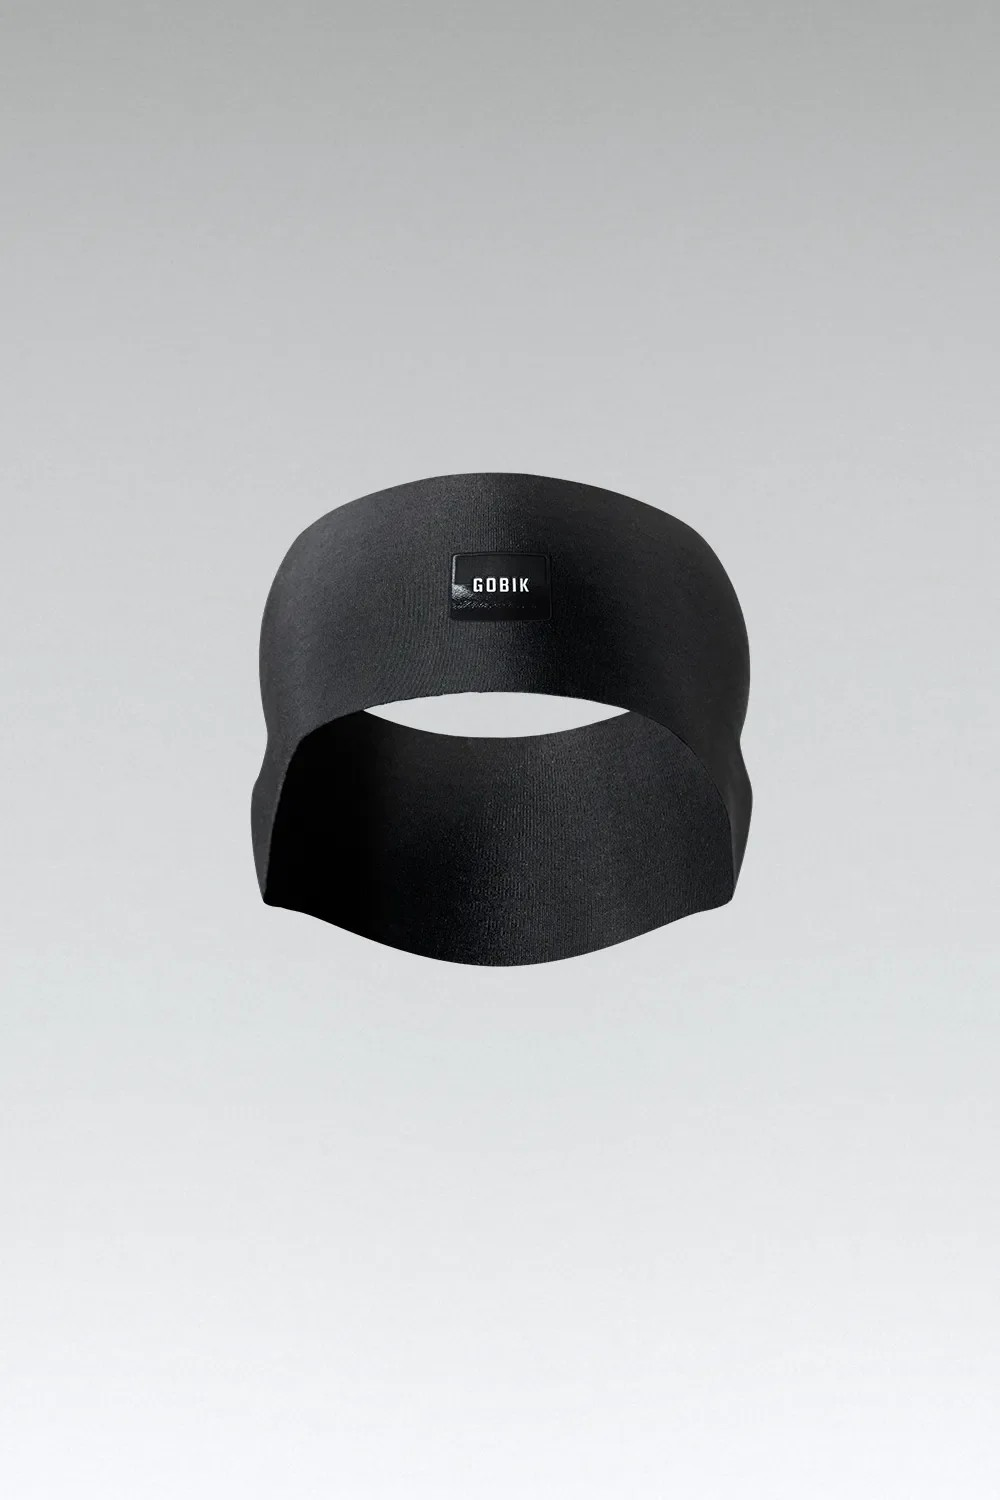 Gobik Frontline Black Thermal Headband | Unisex